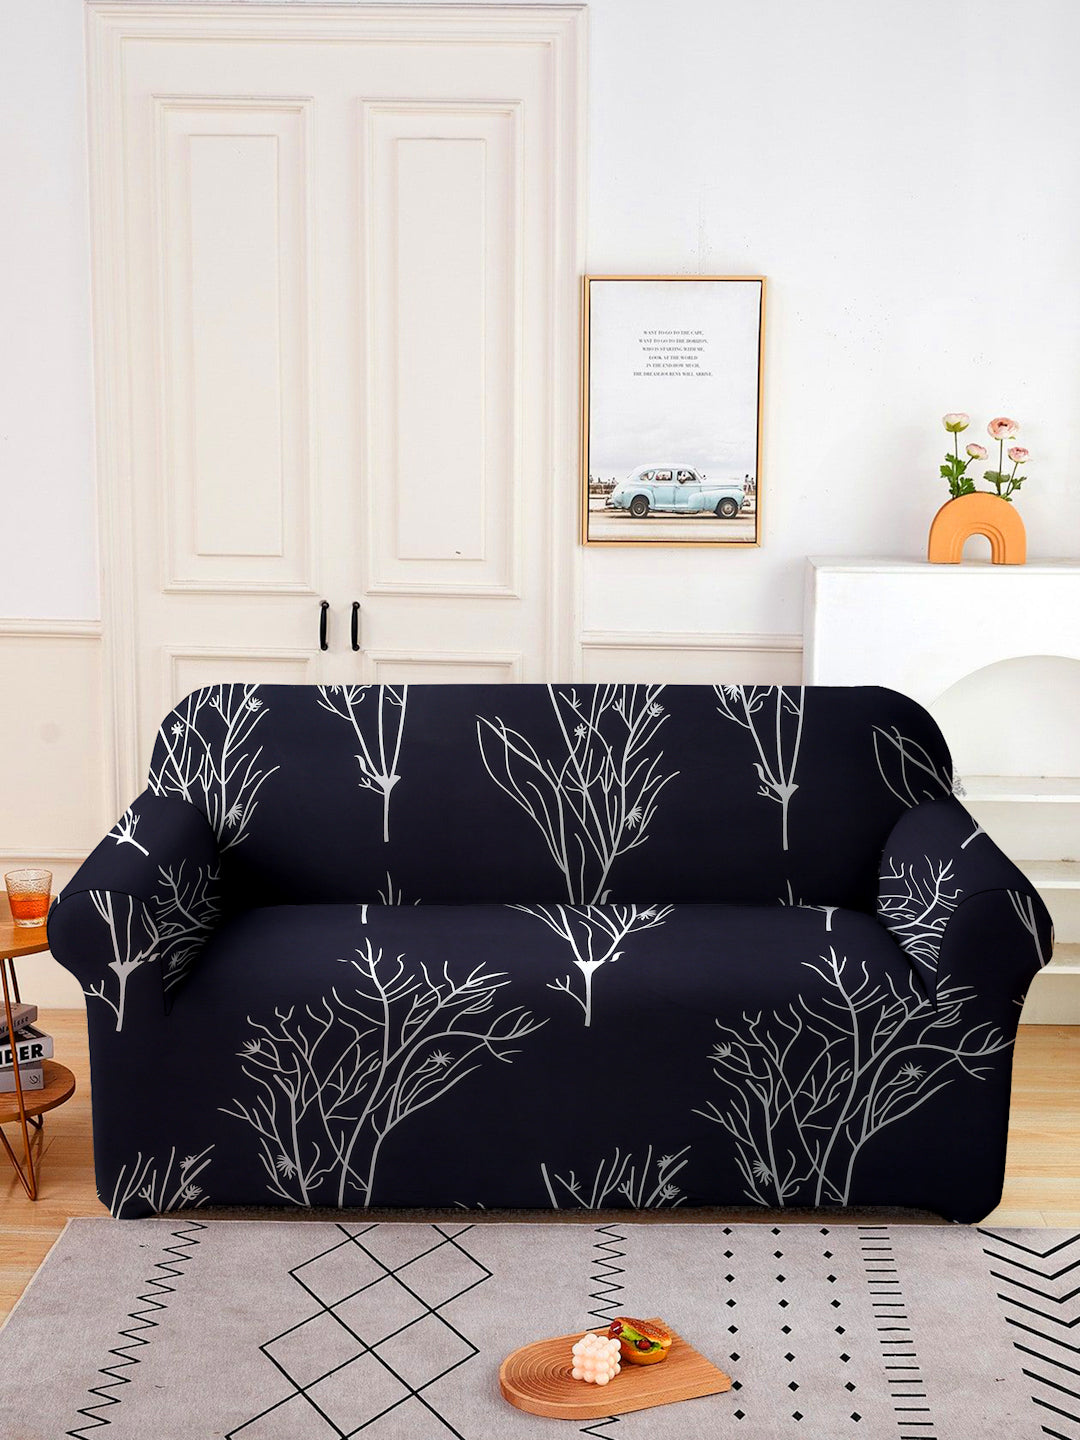 Elastic Stretchable Universal Printed Sofa Cover 2 Seater- Black